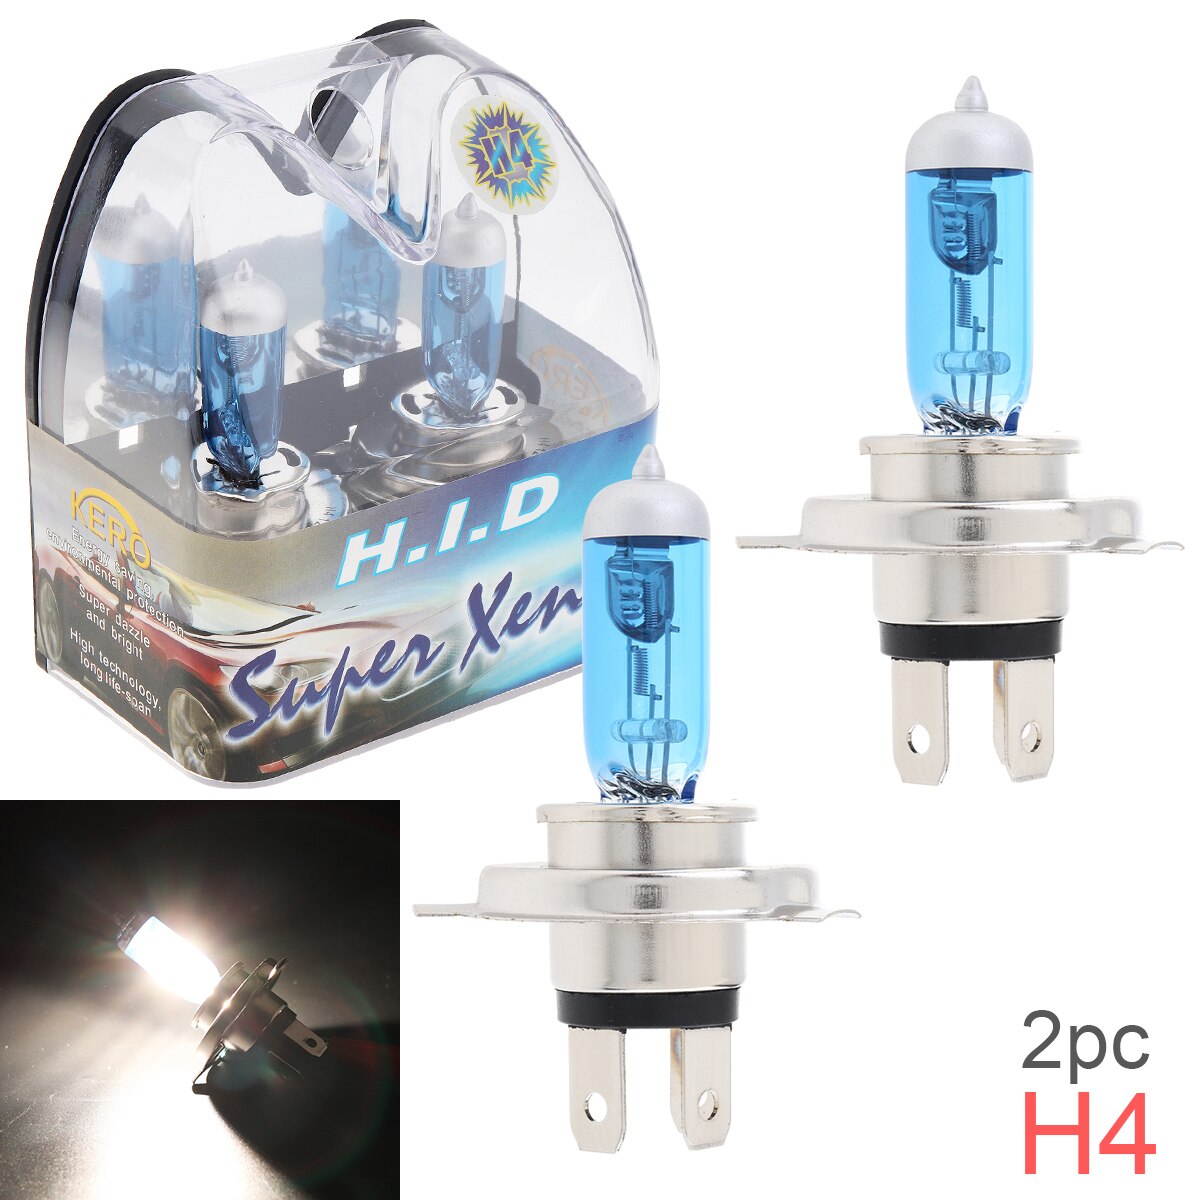 2 Stuks 12V H4 60/55W 6000K Wit Licht Super Bright Auto Xenon Halogeen Lamp Auto koplamp Fog Lamp Voor Auto 'S Voertuigen Suv